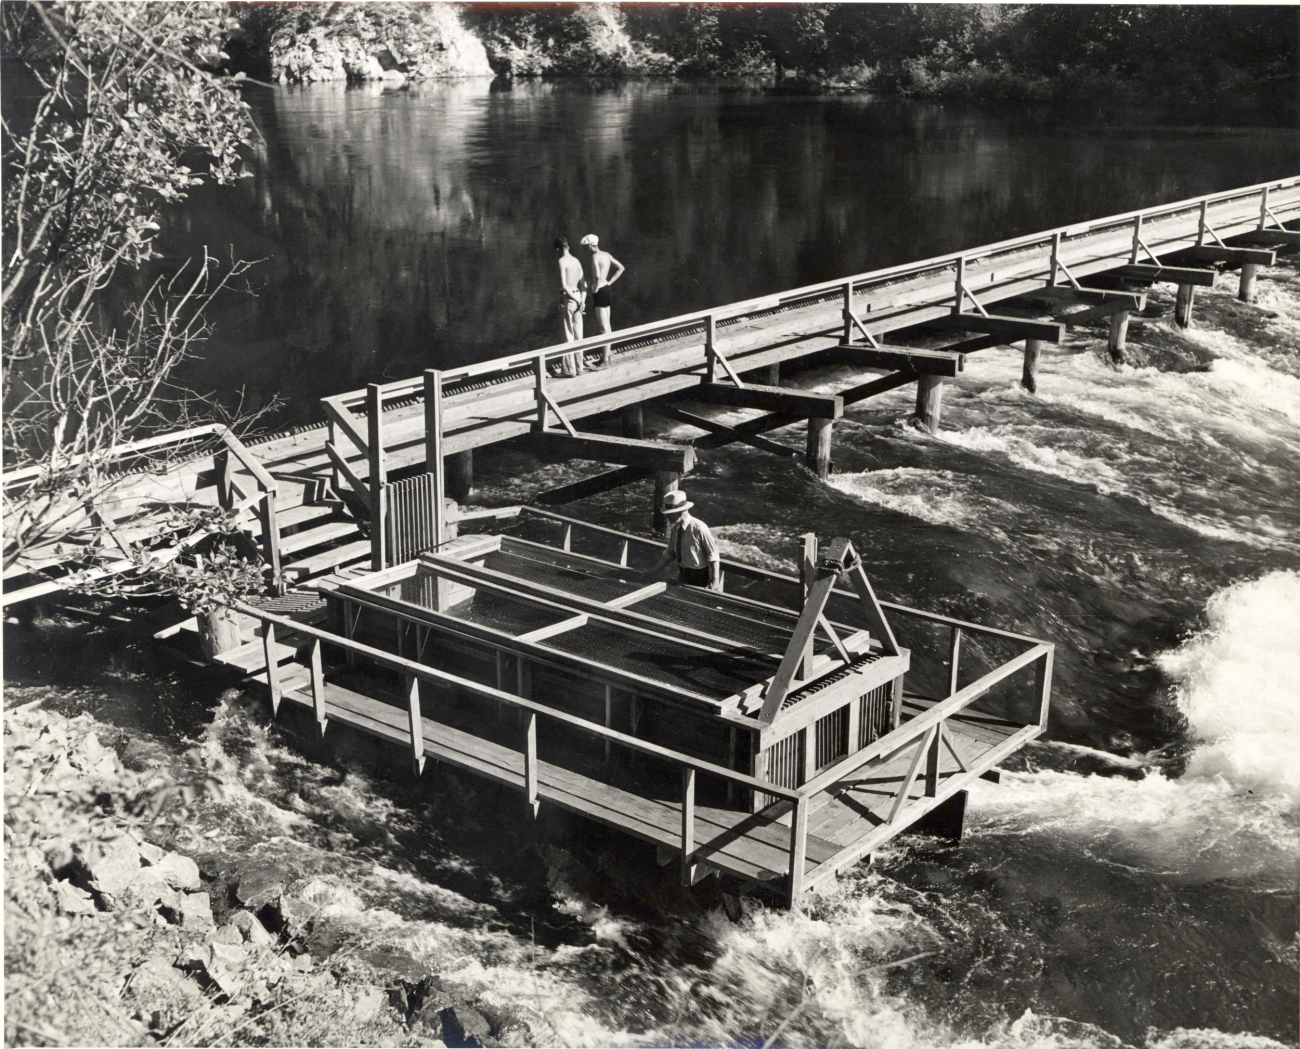 Steelhead trap at the Tumwater weir on the Wenatchee River